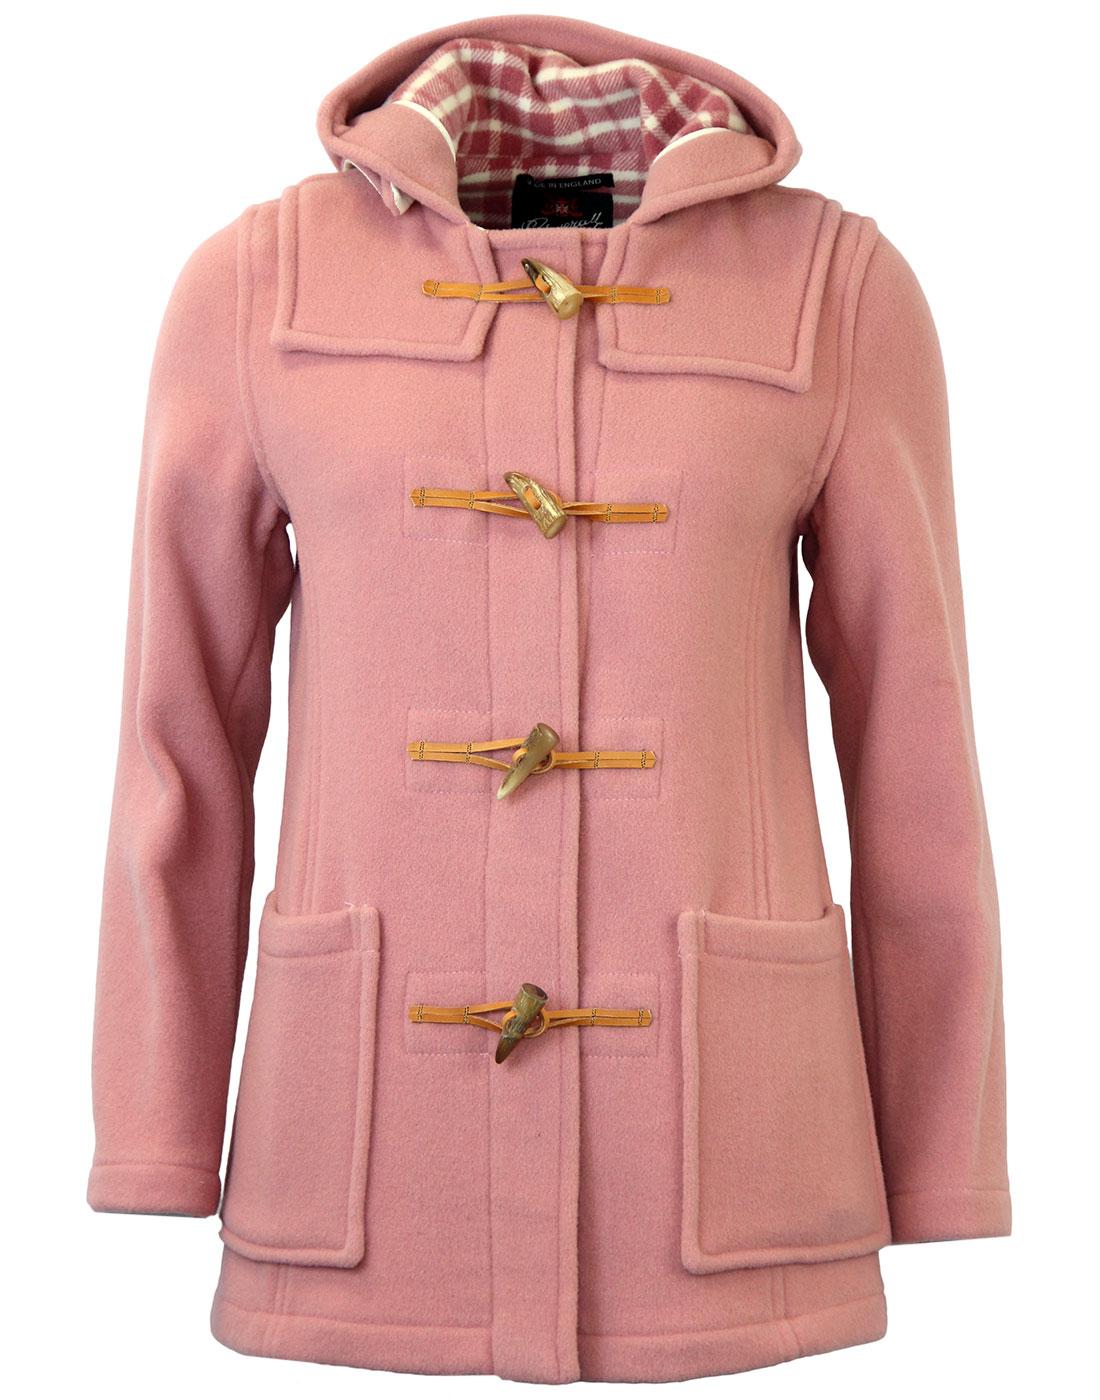 Gloverall Duffle Coats for Women | Retro Original Duffle Coat